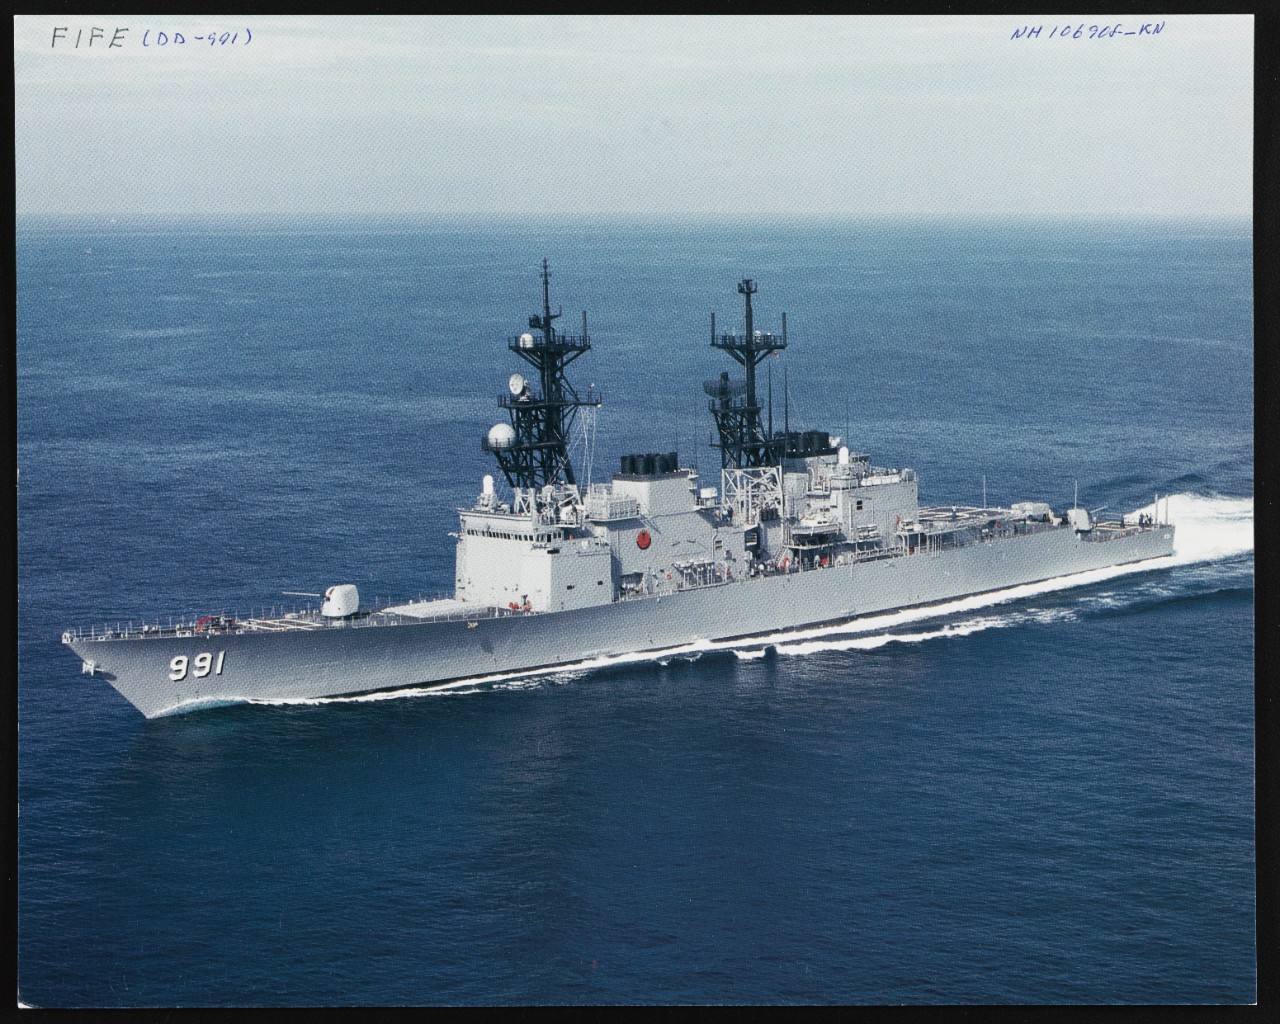 Photo # NH 106908-KN USS Fife